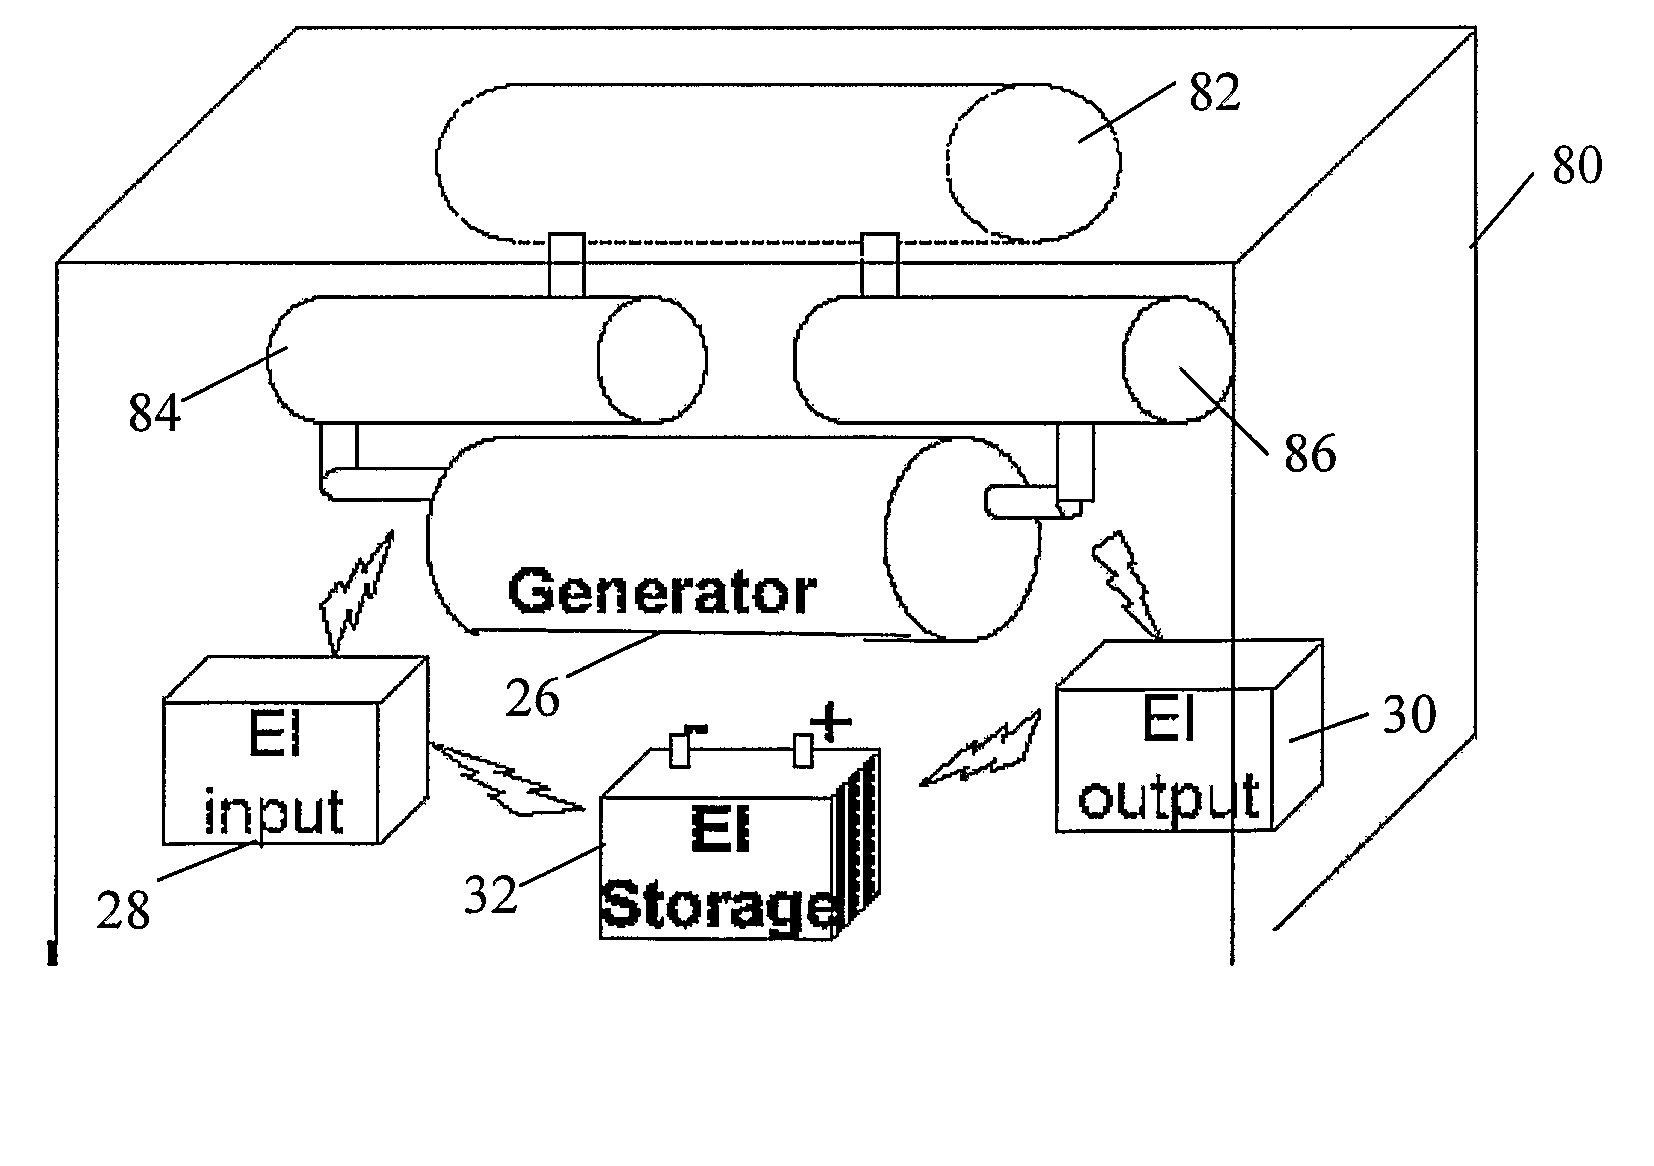 Power Generator